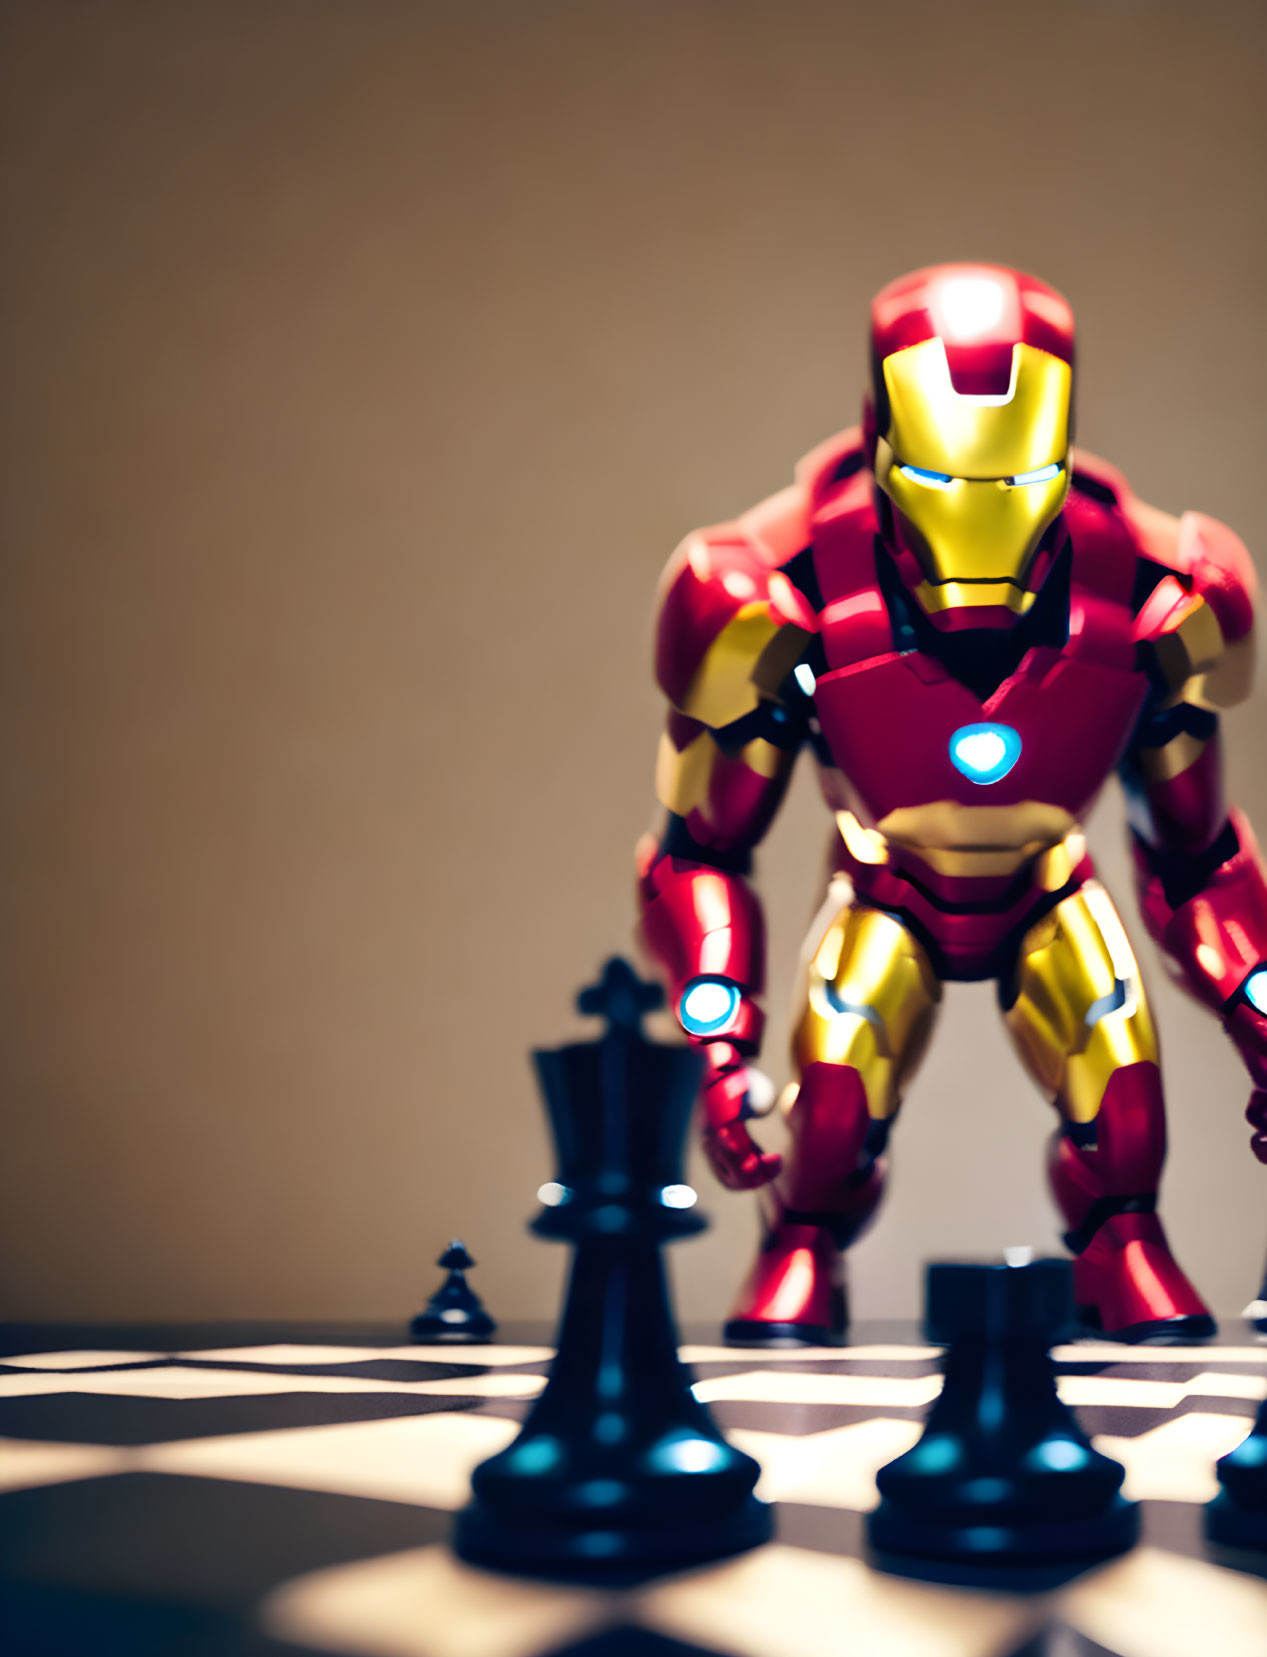 Toy Iron Man Figure Dominates Chessboard Scene